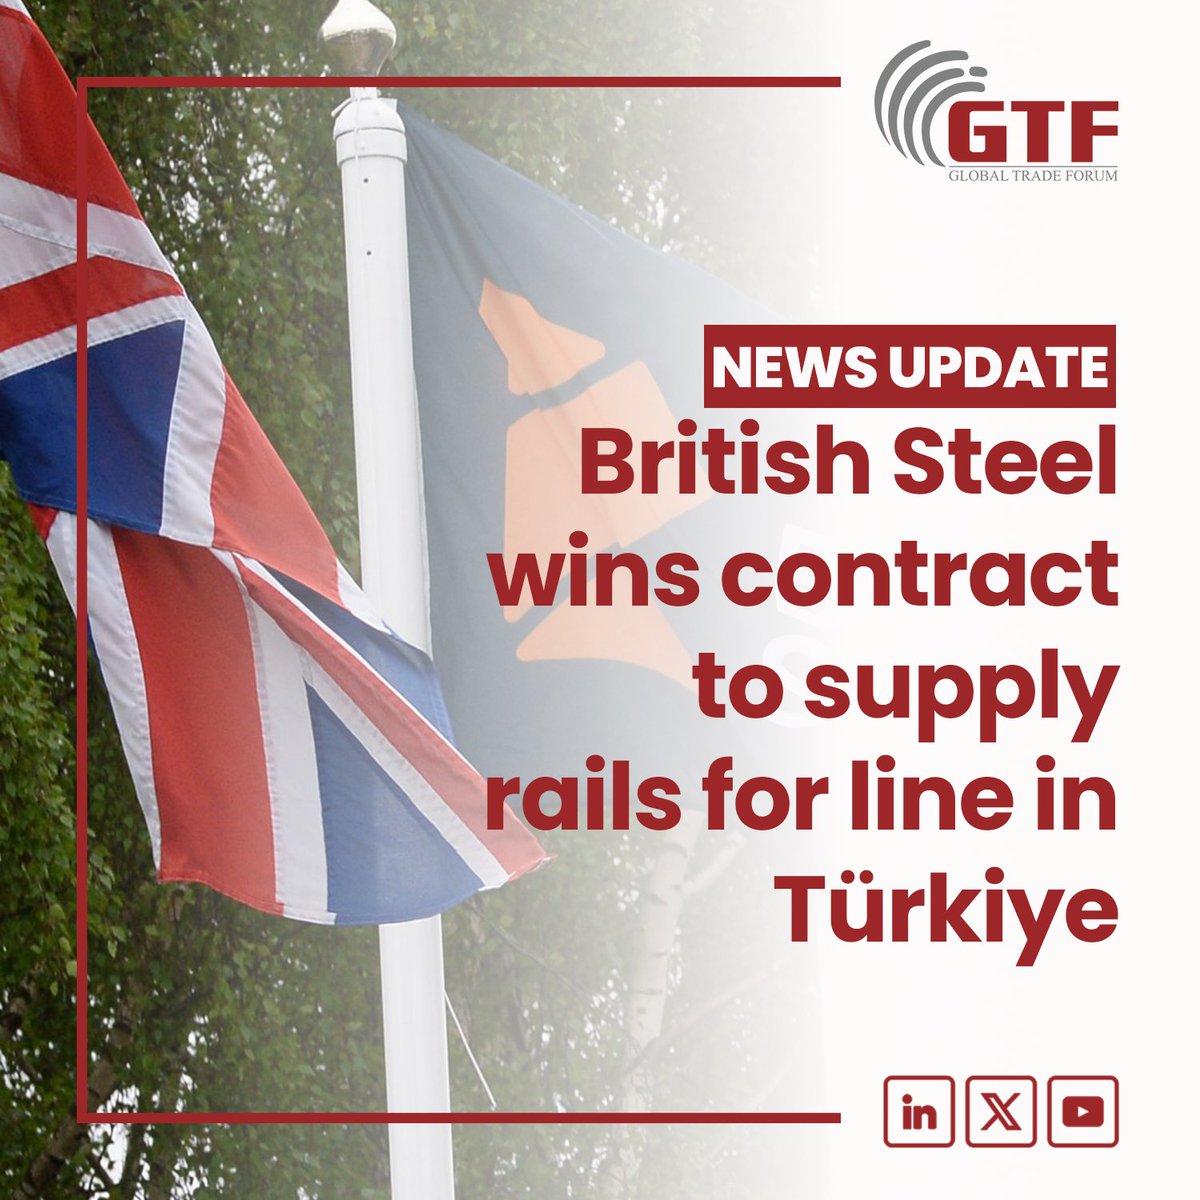 Major U.K. steelmaker British Steel announced Wednesday it has won a multimillion-pound contract to supply rails for a new high-speed electric railway in Türkiye.

#TürkiyeTrade #GTF2024 #GlobalTradeForum #EUTradeRelations #EuropeEconomy #TradeDiplomacy #TradeAlliance